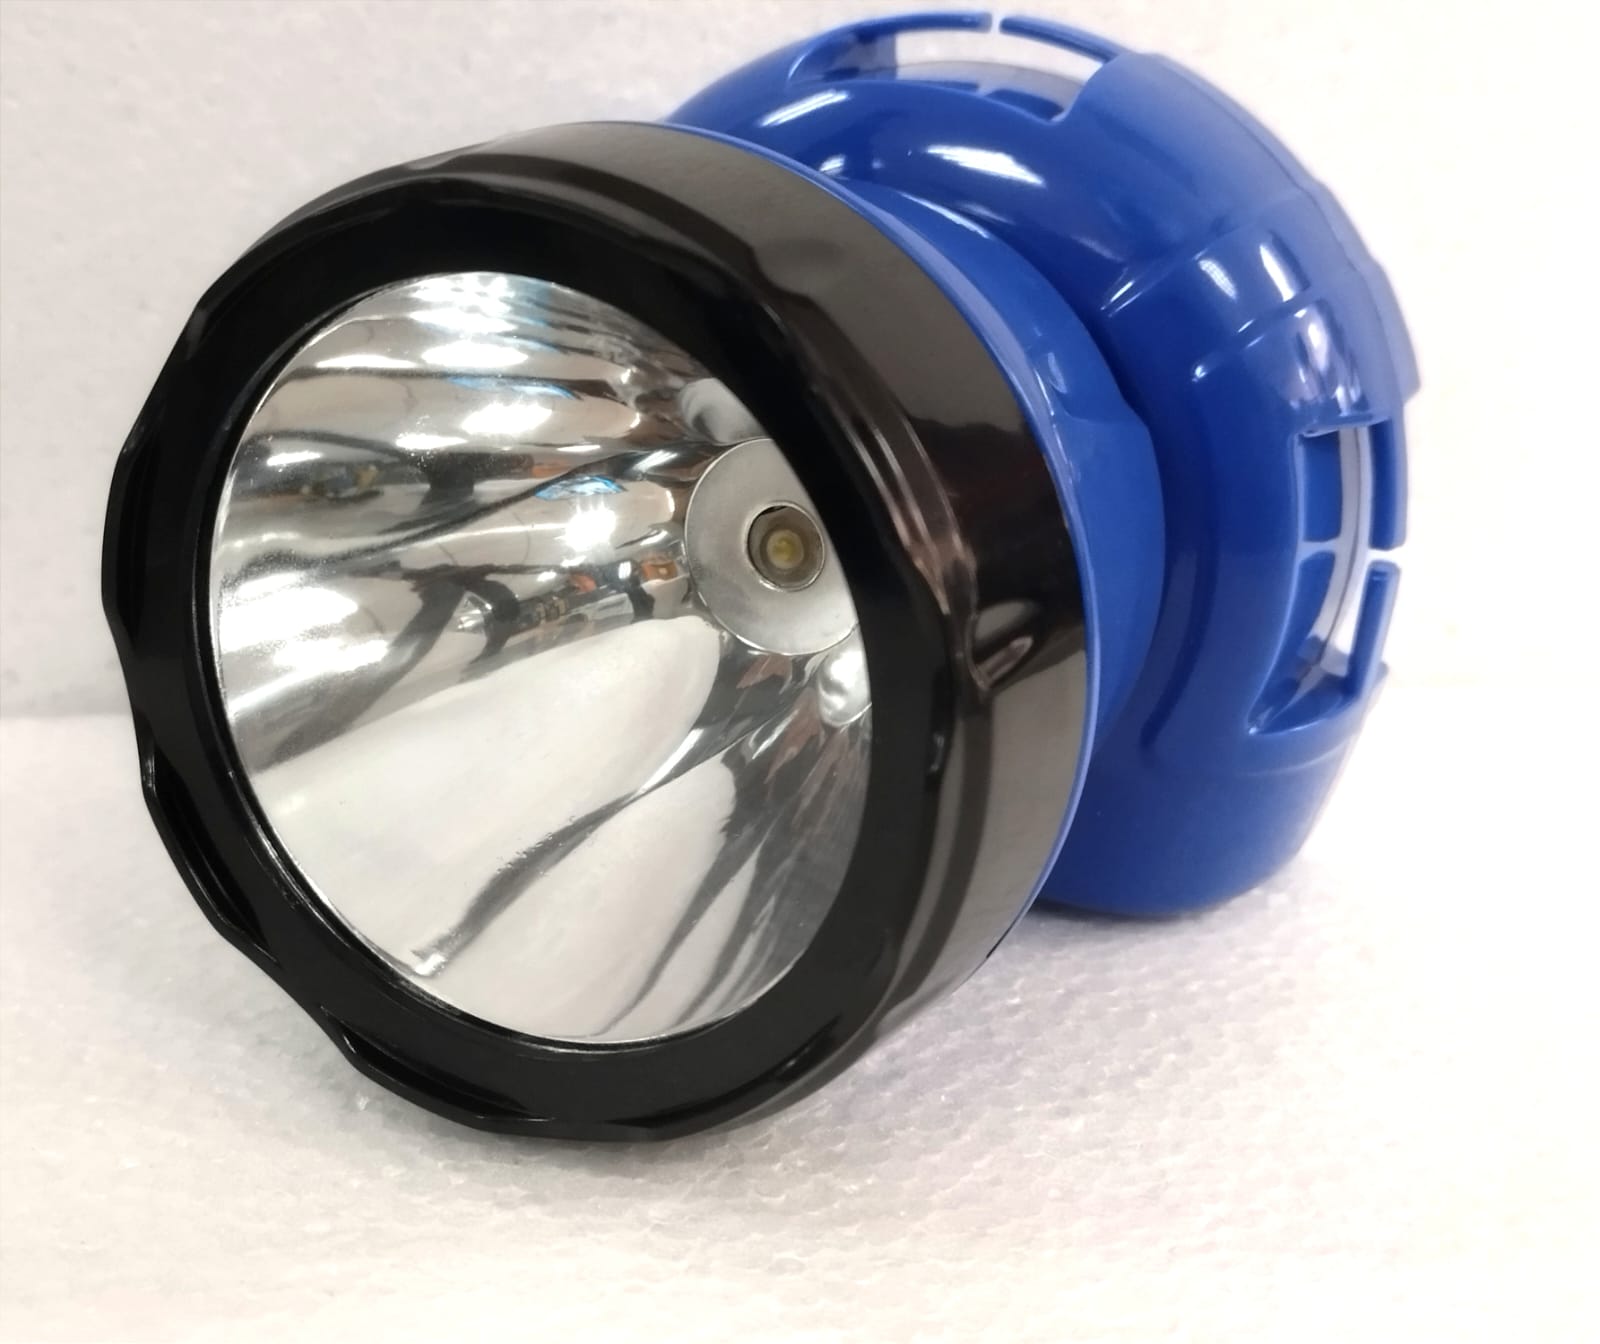 Comprar Linterna frontal LED 2022, luz potente, linterna montada